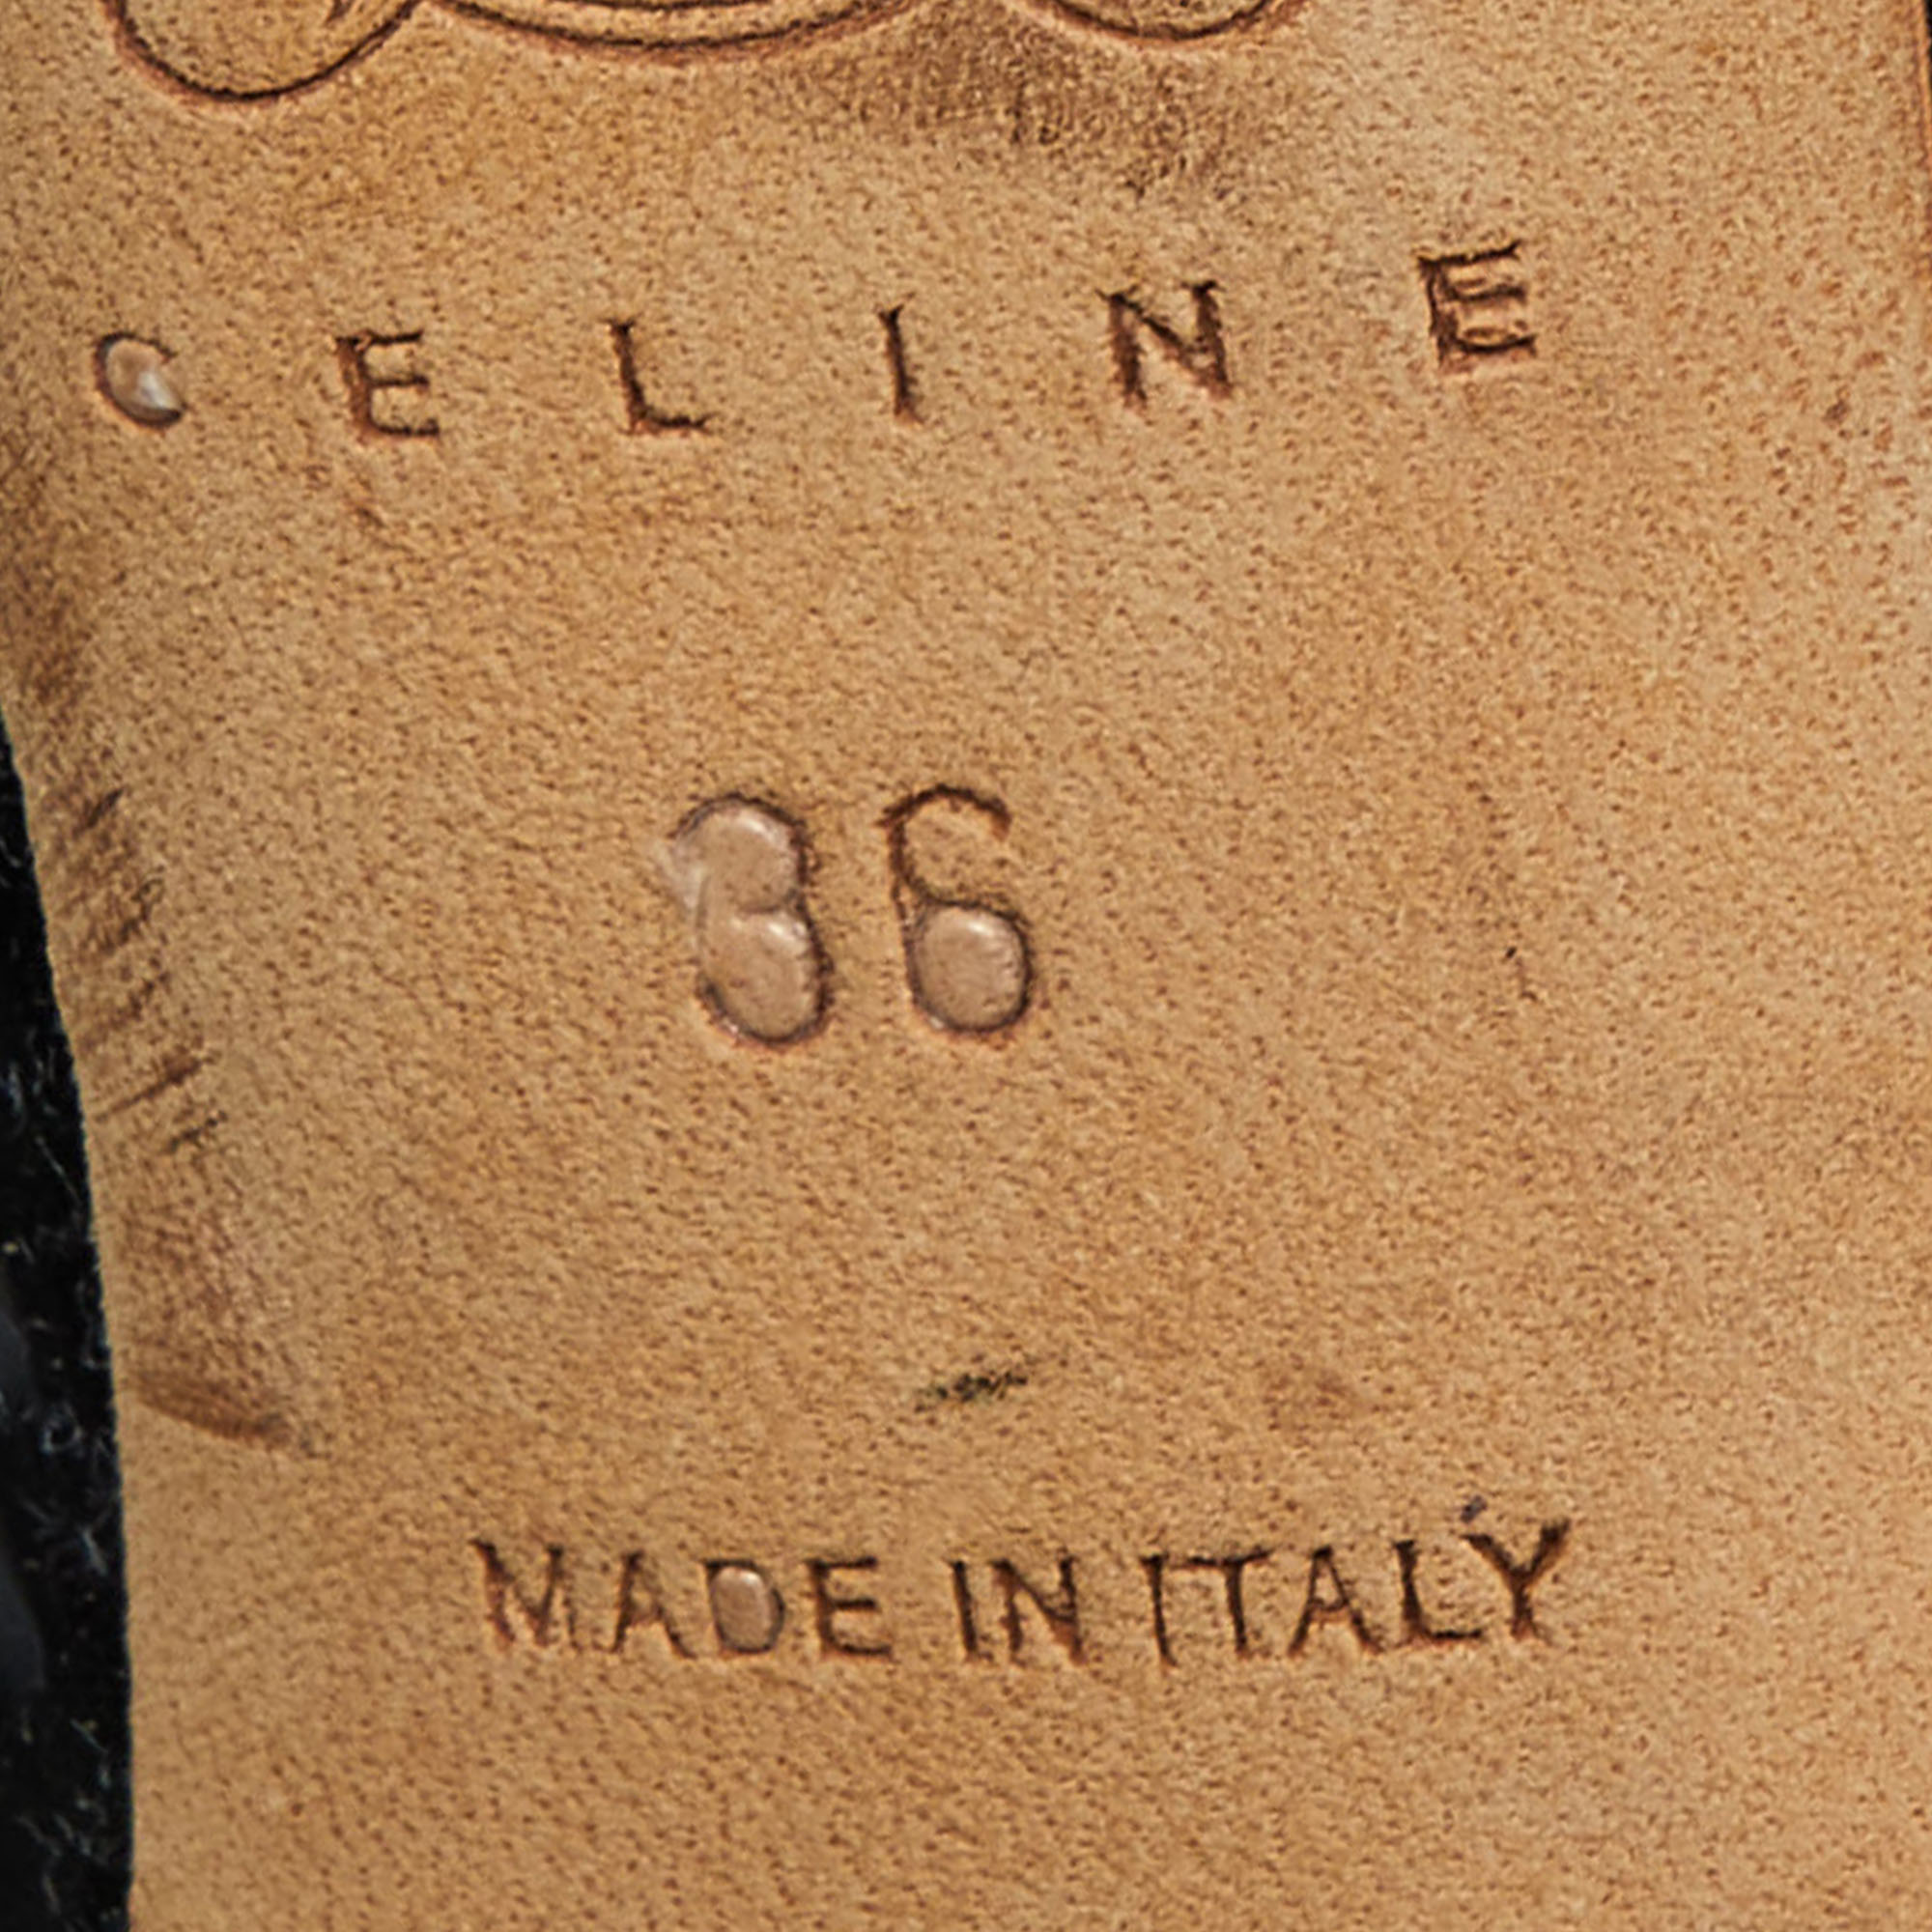 Celine Black Patent Leather Strappy Sandals Size 36